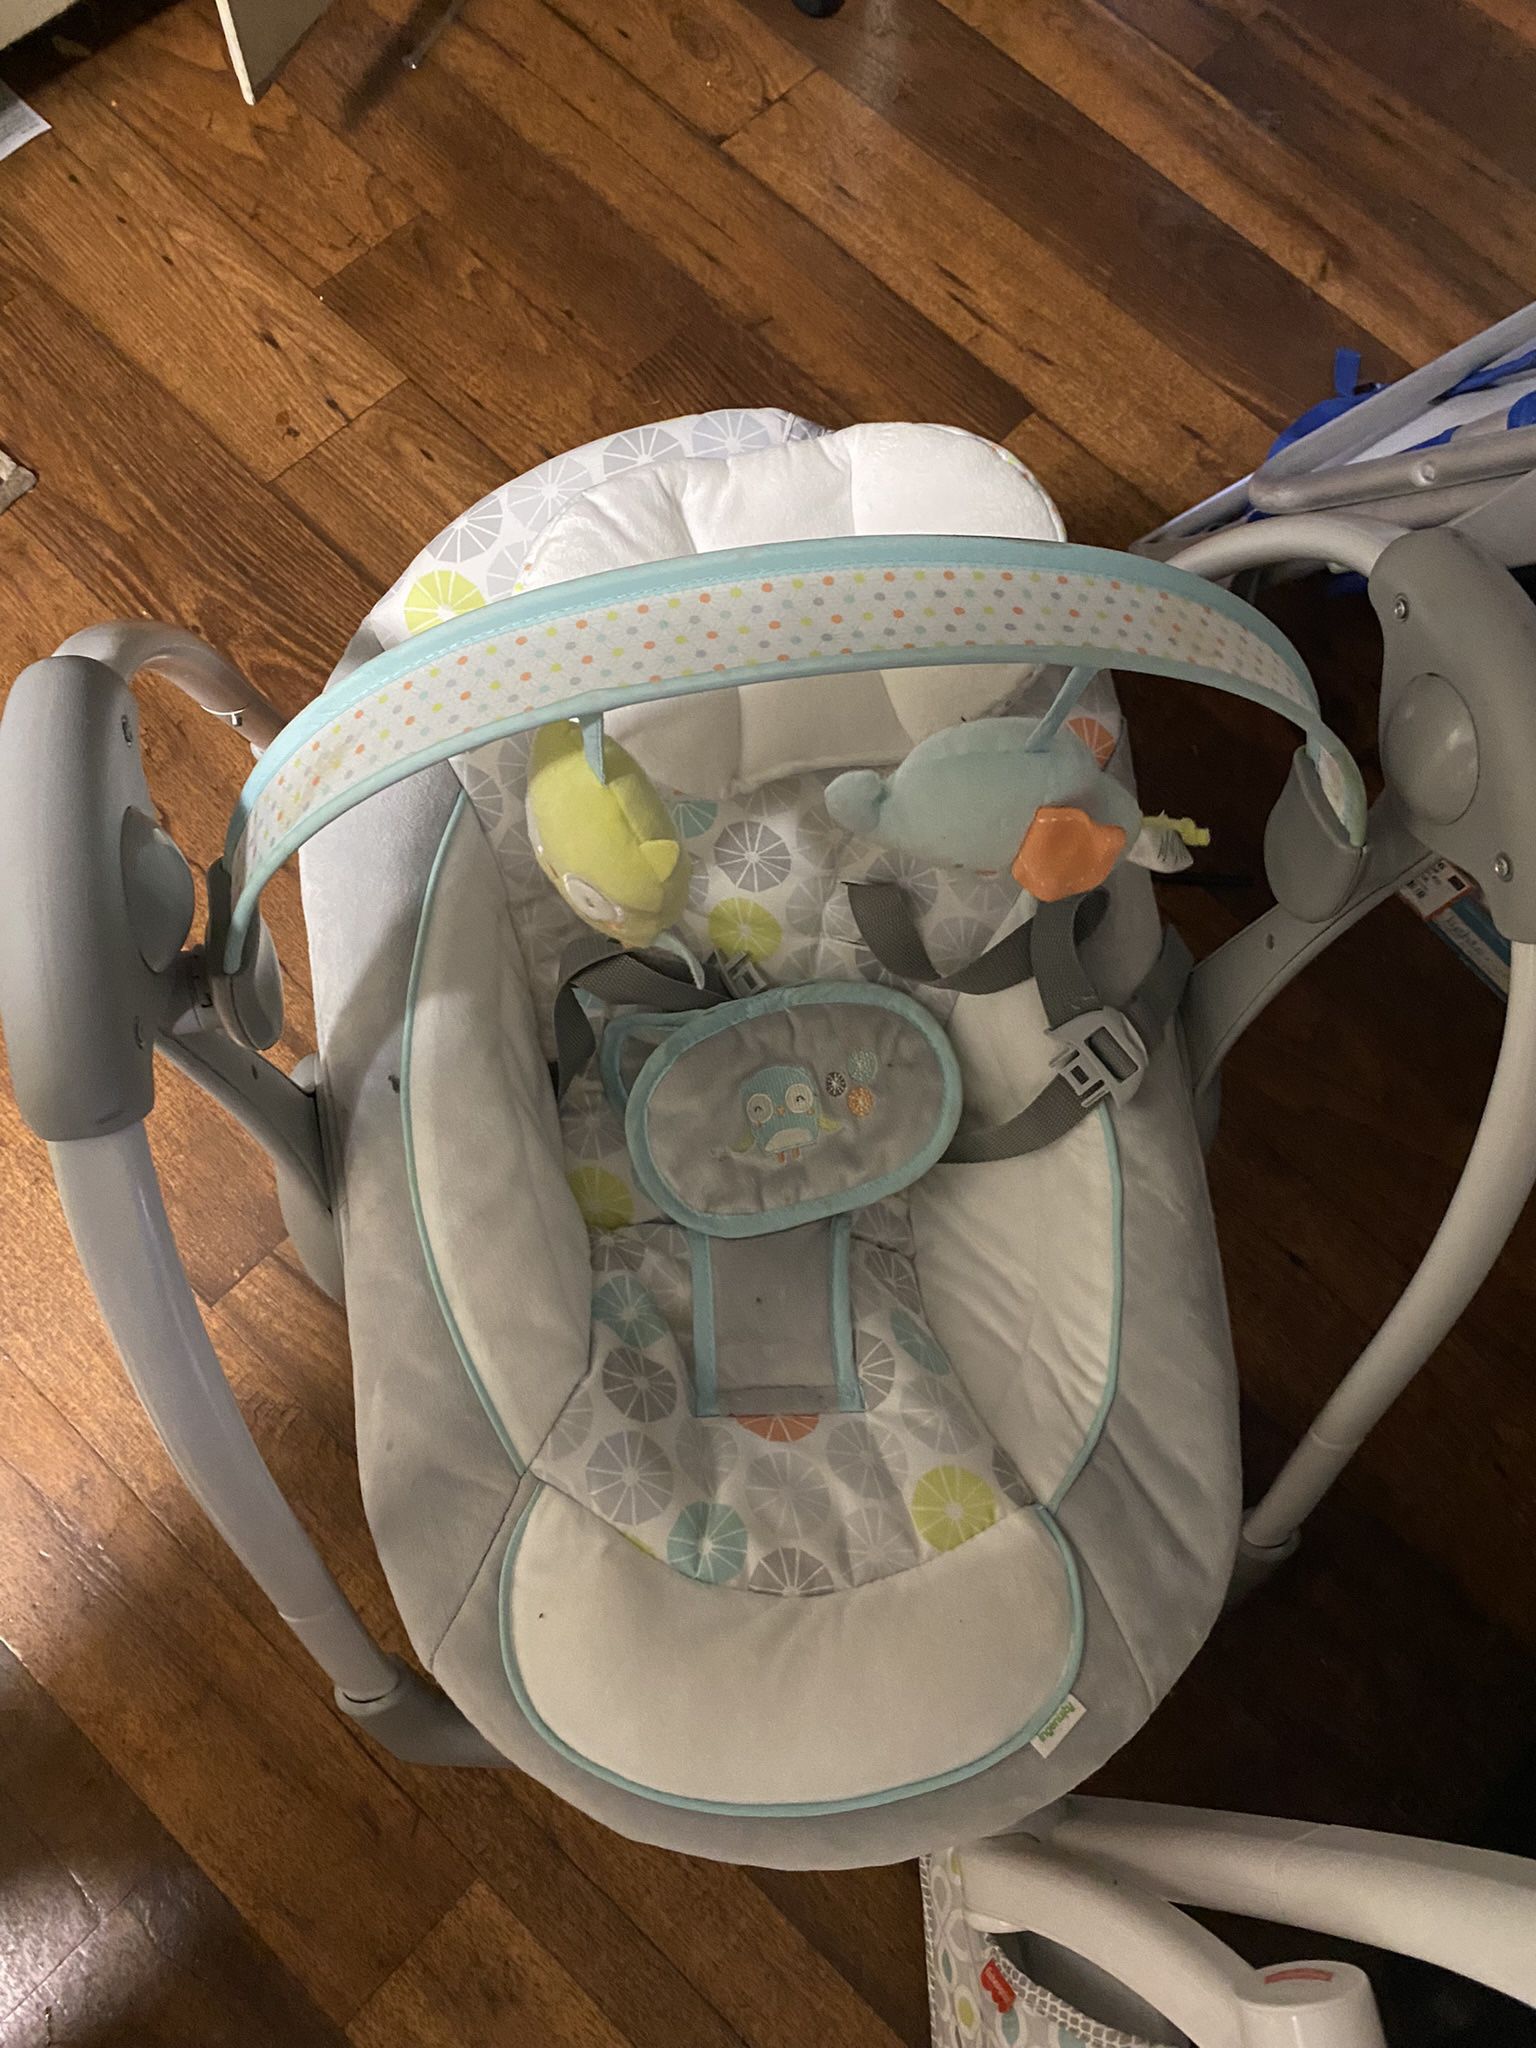 Ingenuity Portable Baby Swing